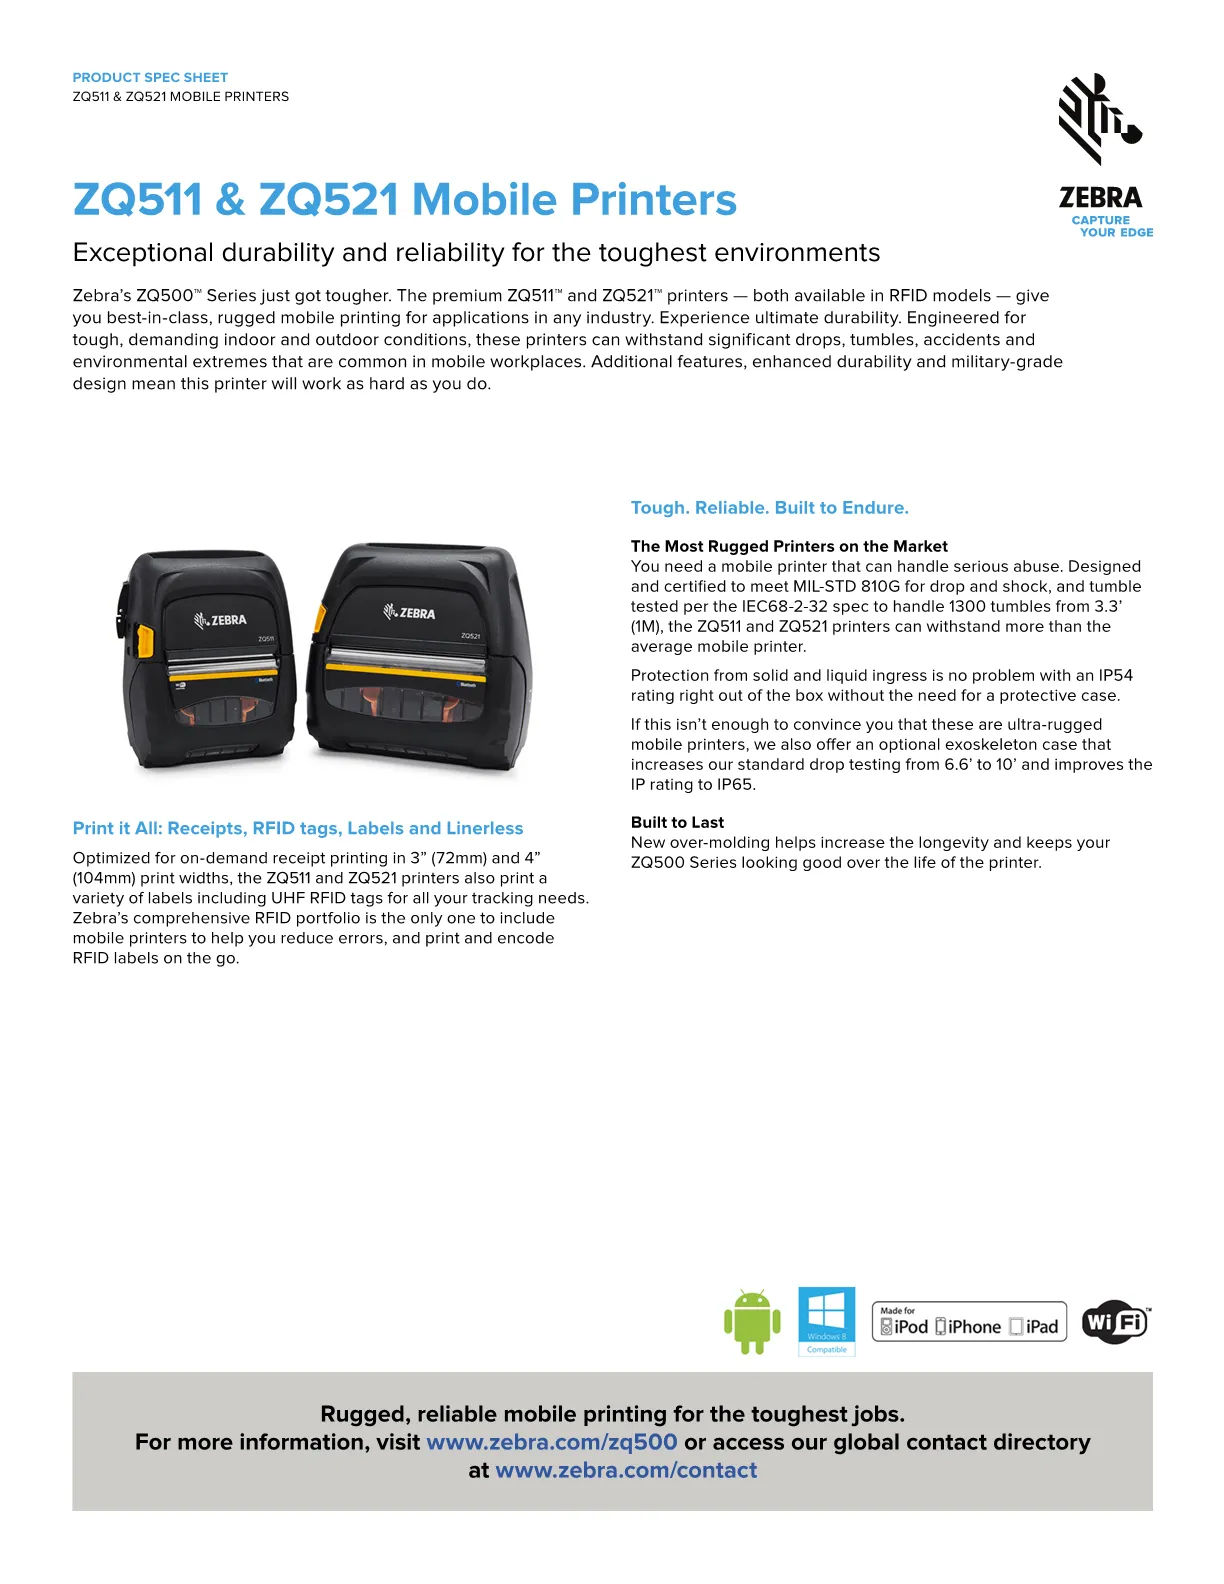 Zebra Zq511 Mobile Label Printer 3 Inch Bluetooth 4 Netnest New Zealand 3889